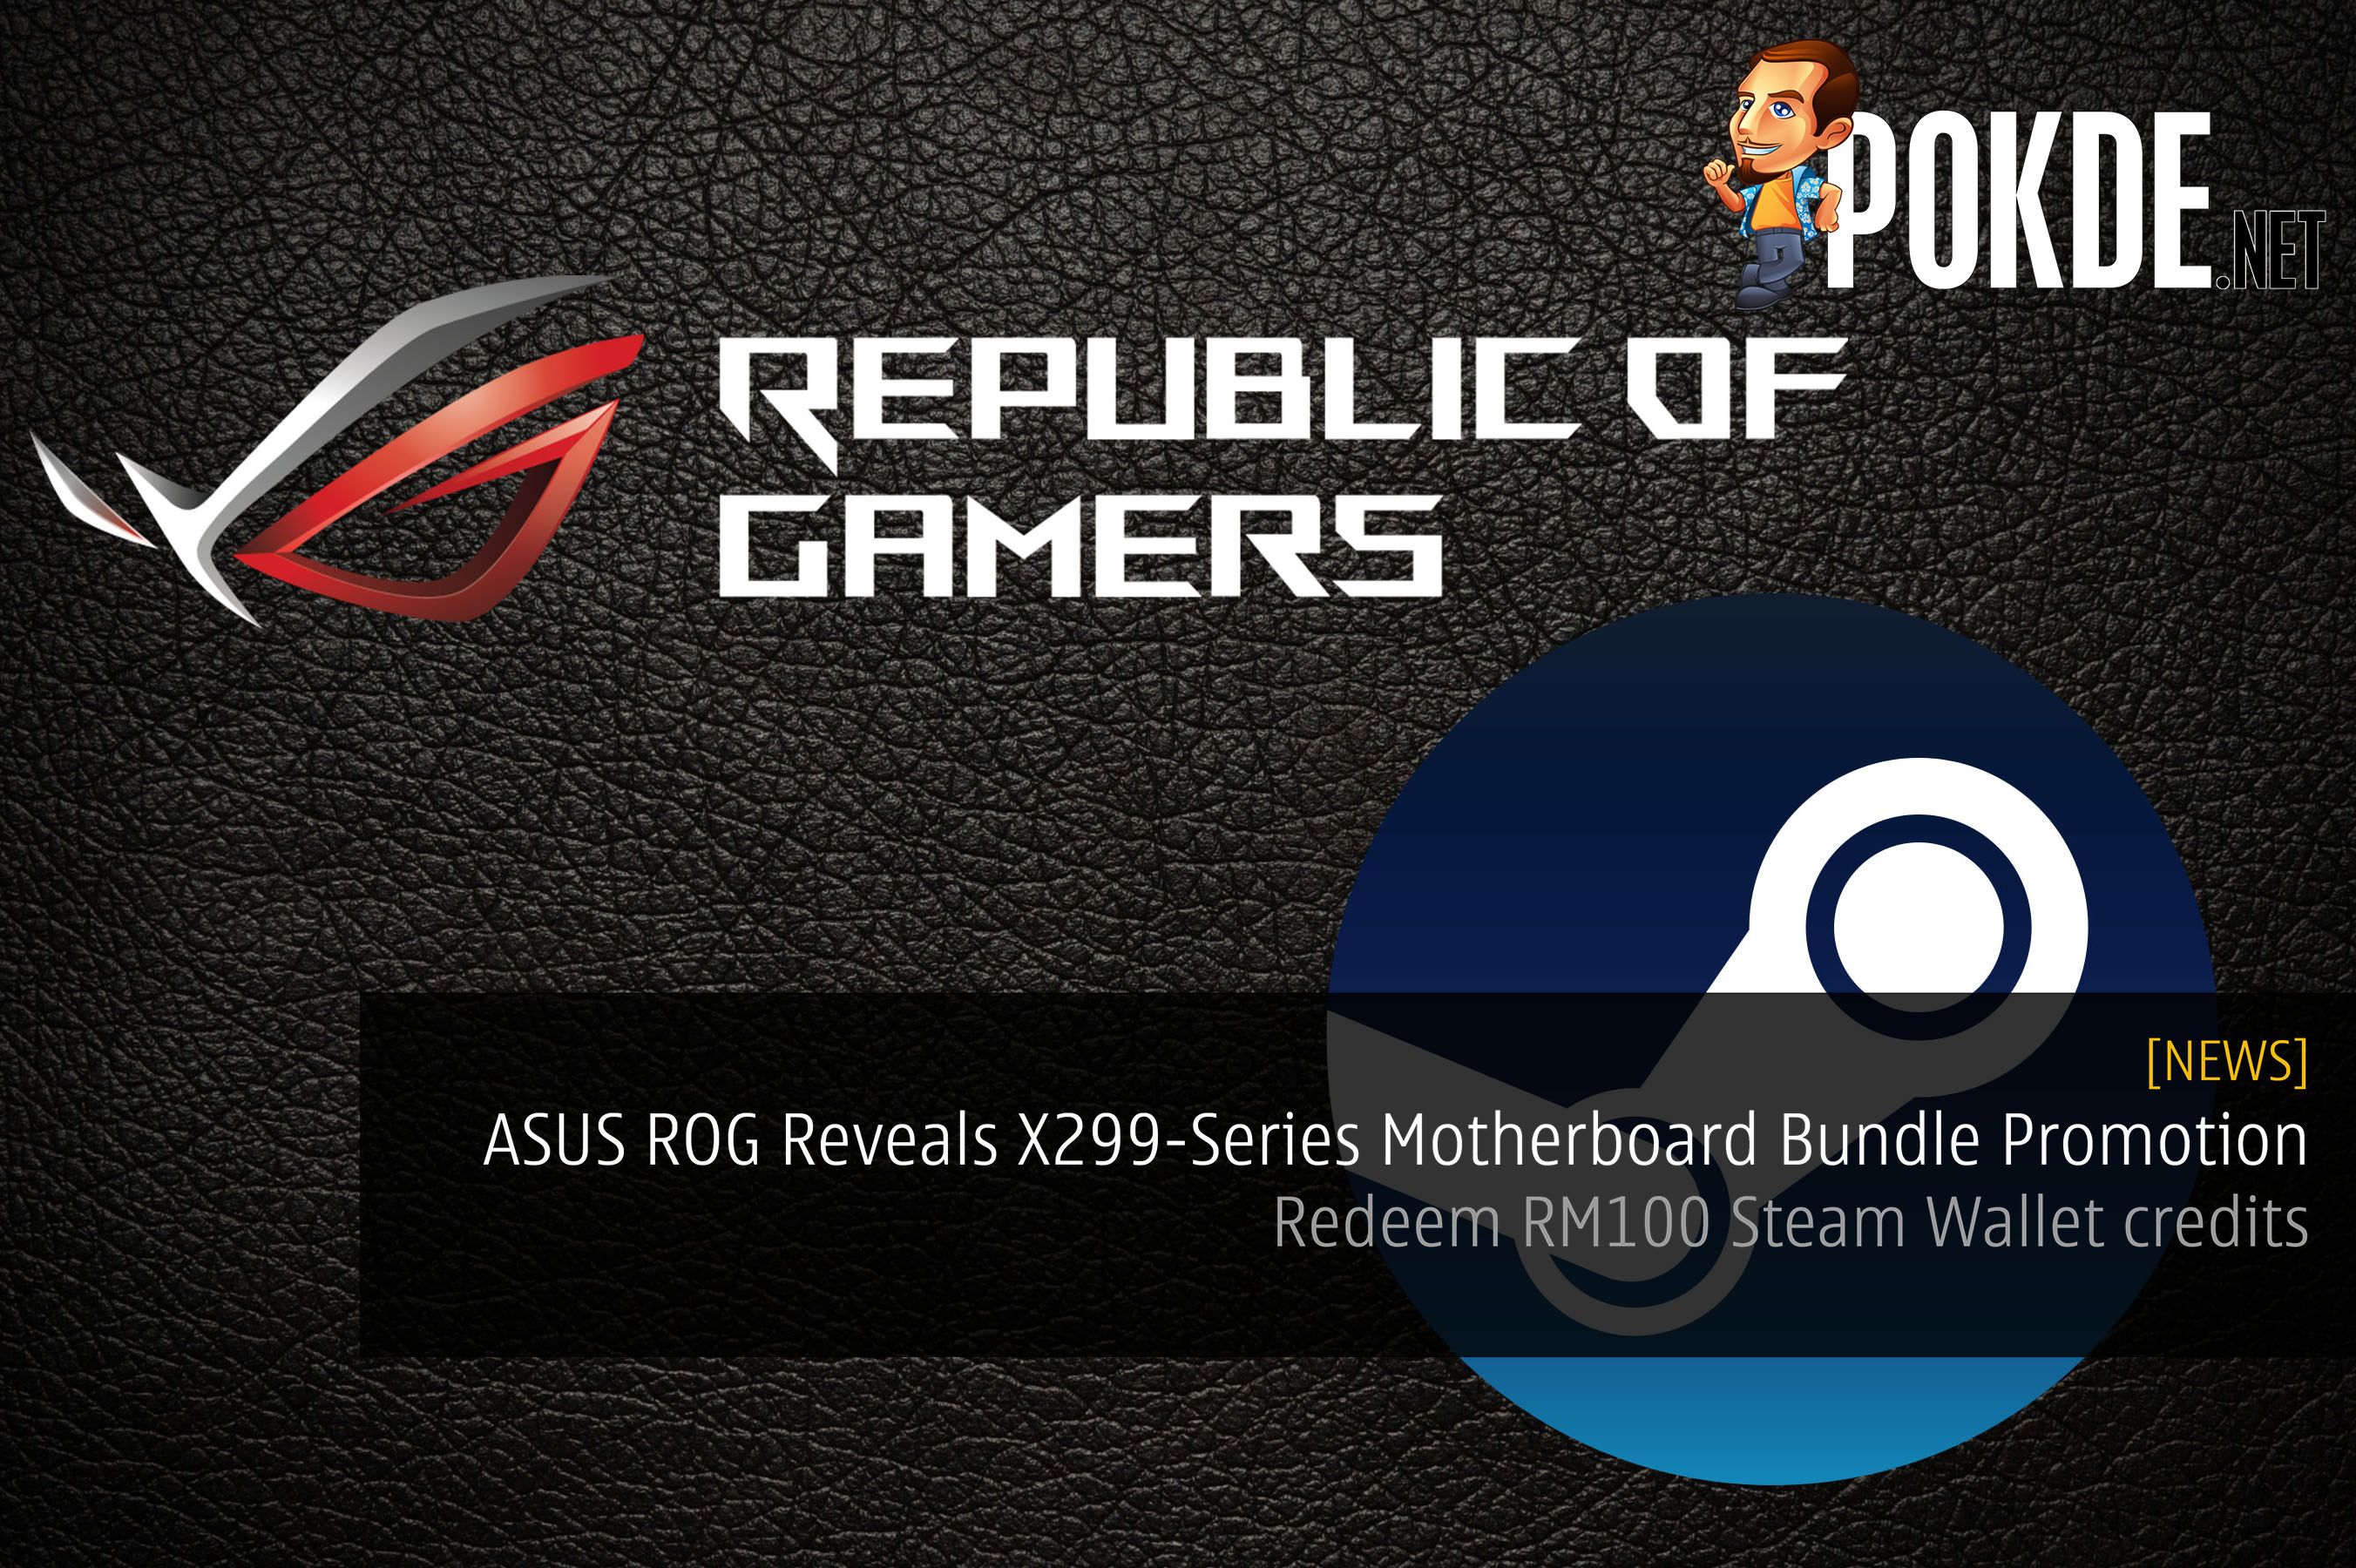 ASUS ROG Reveals X299 Motherboard Series Bundle Promotion - Redeem RM100 Steam Wallet credits 28